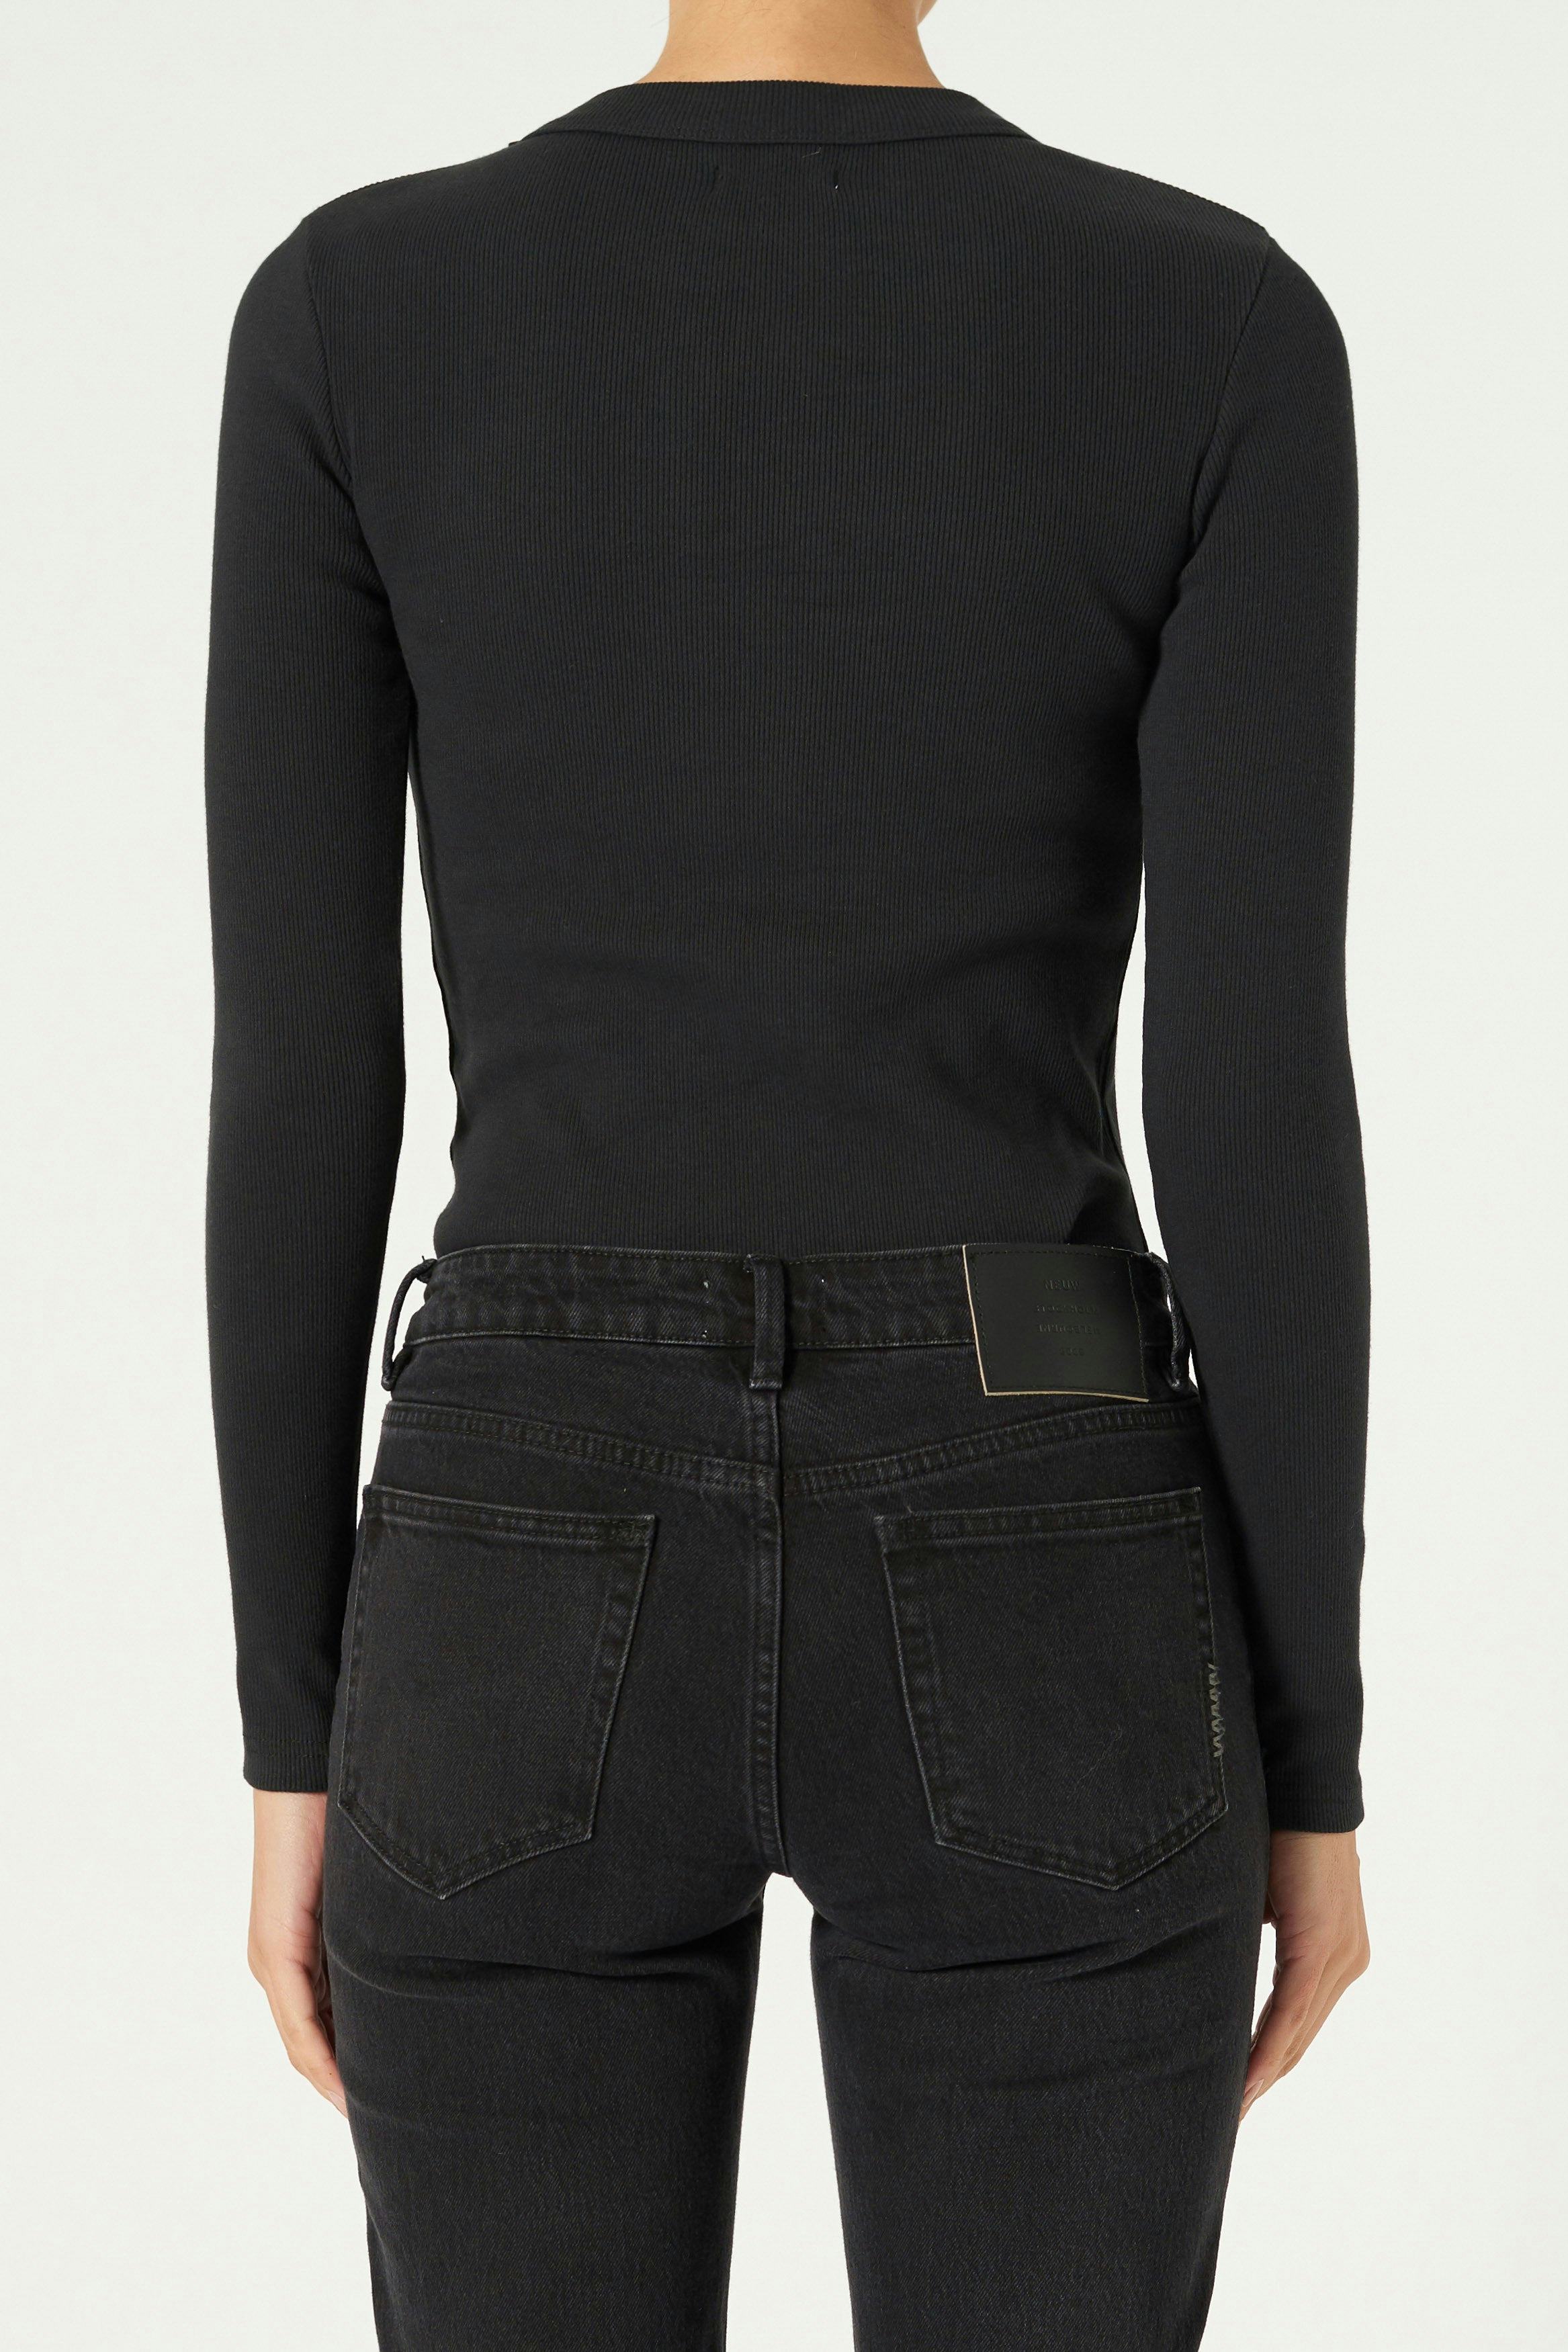 Jonesy Long Sleeve - Black Neuw straight black womens-blouse 